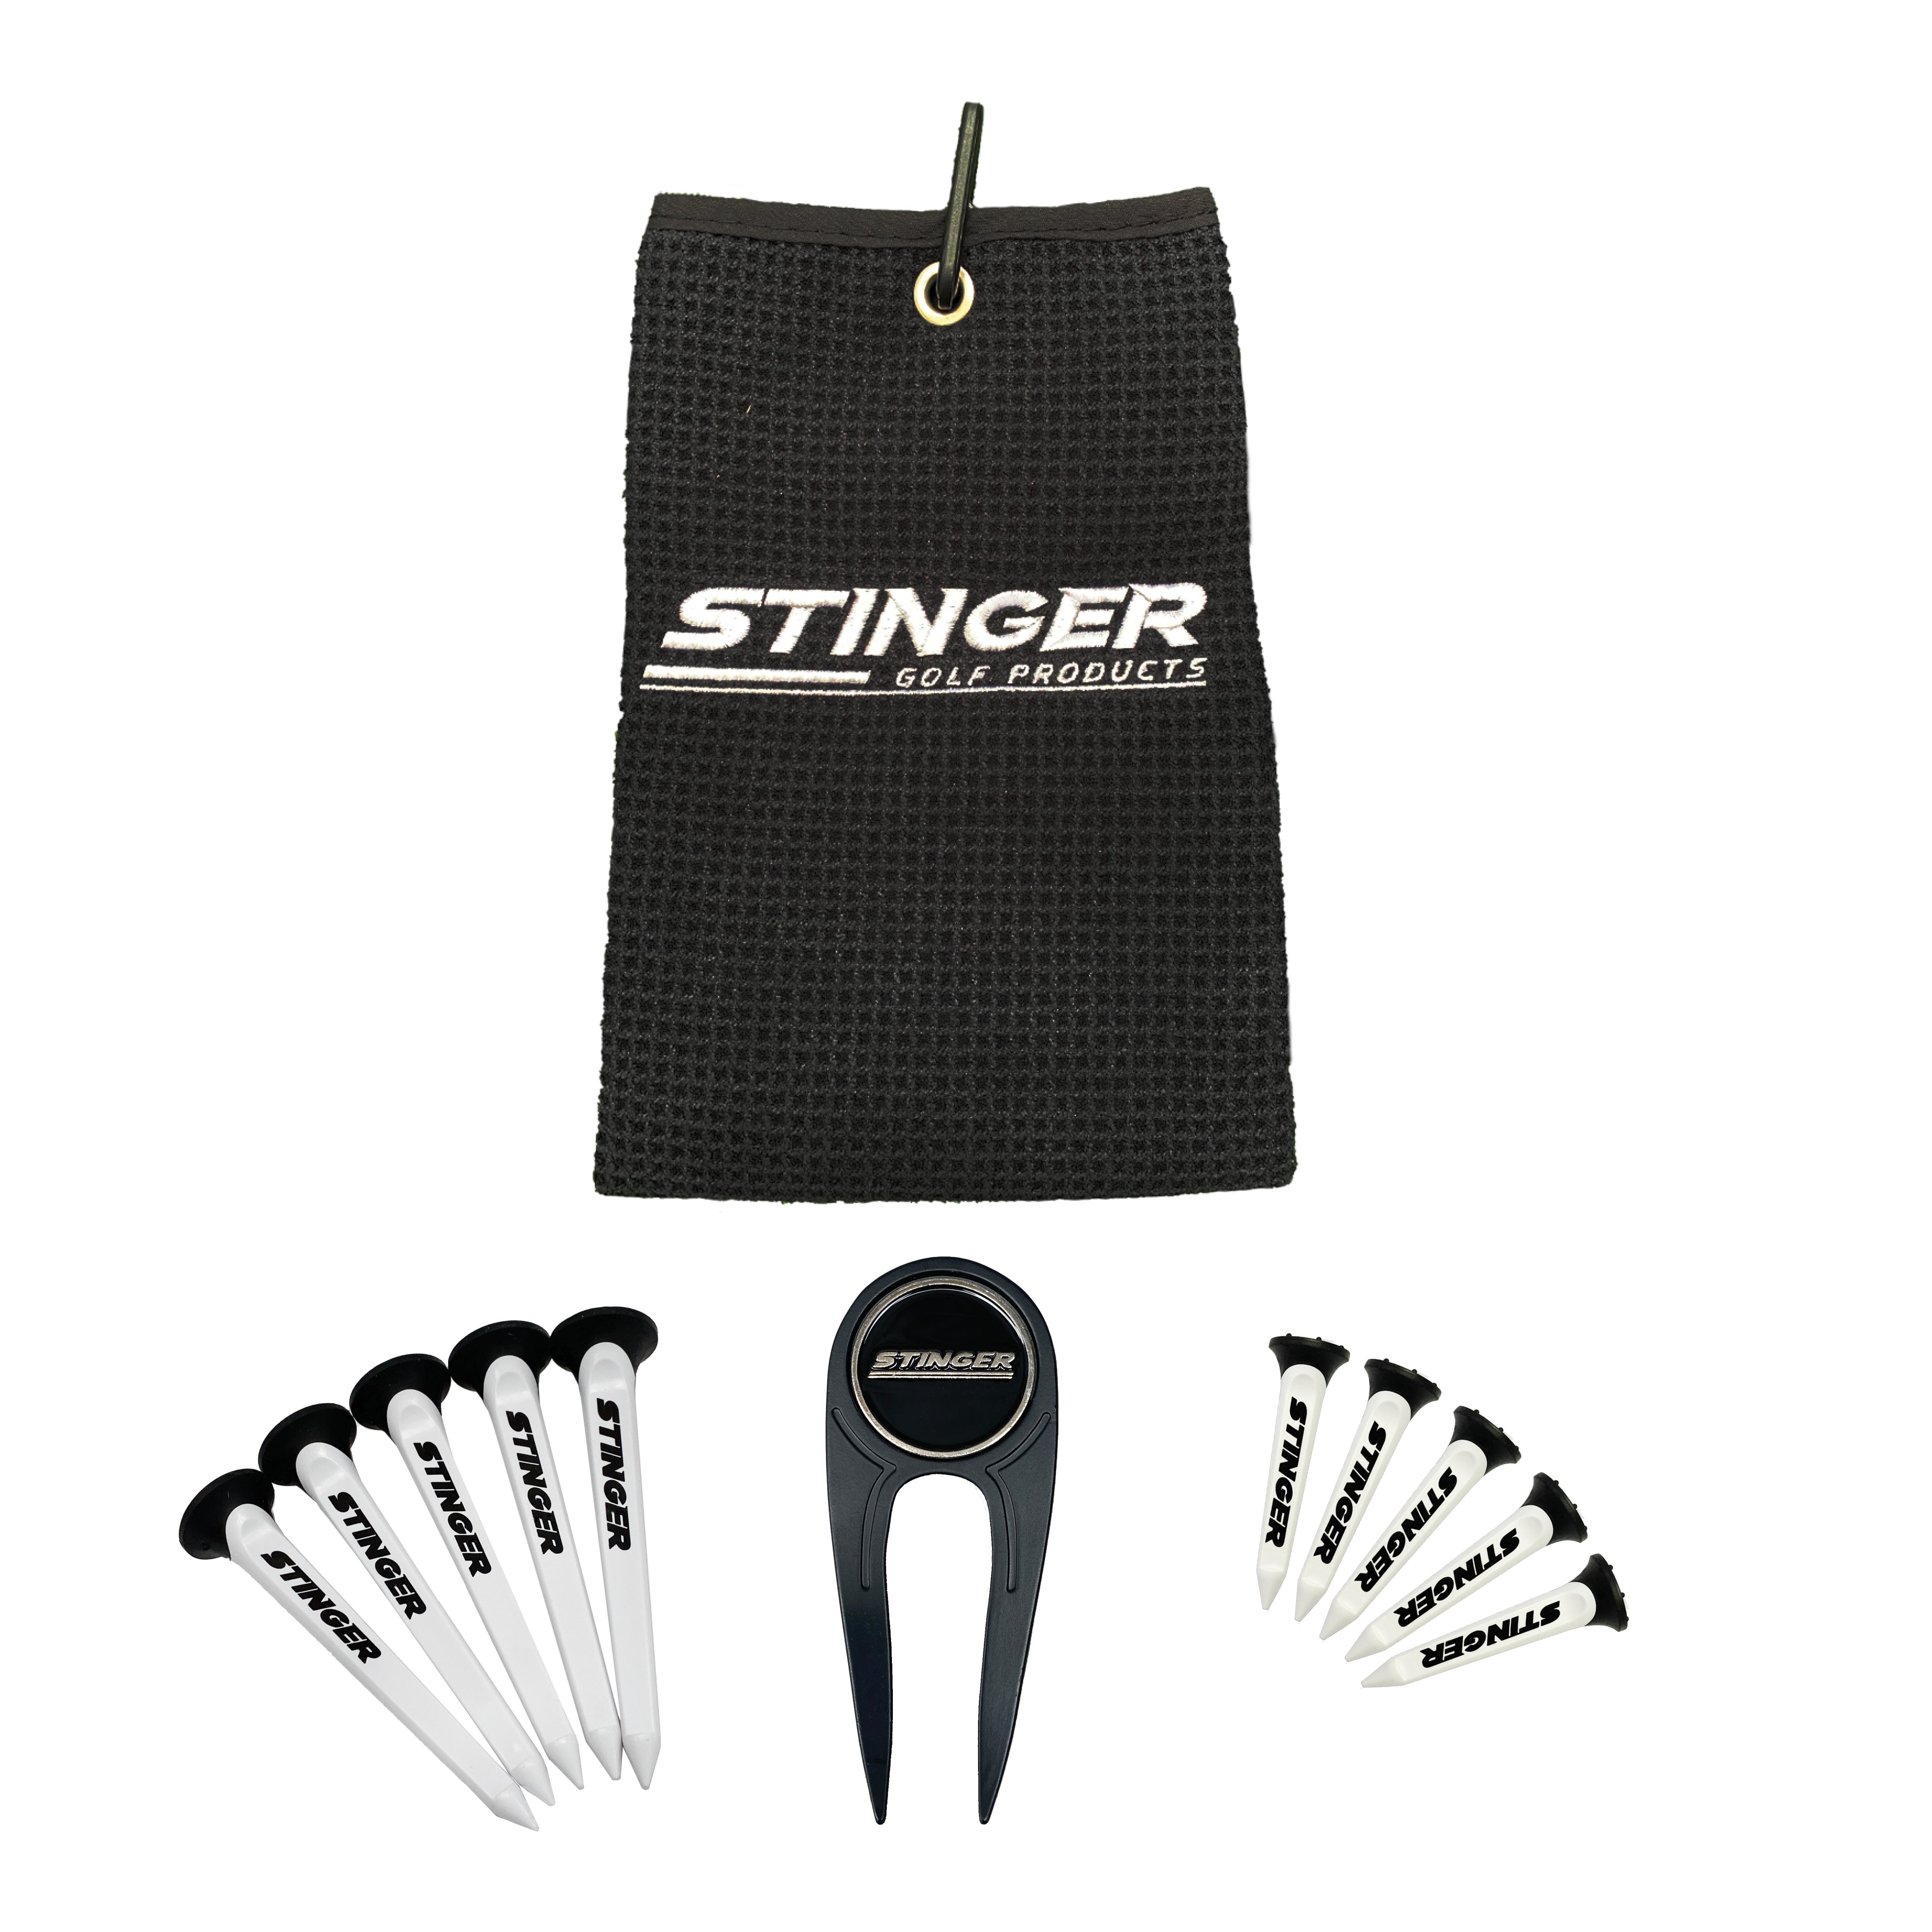 Stinger Players Accessories Bundle 7